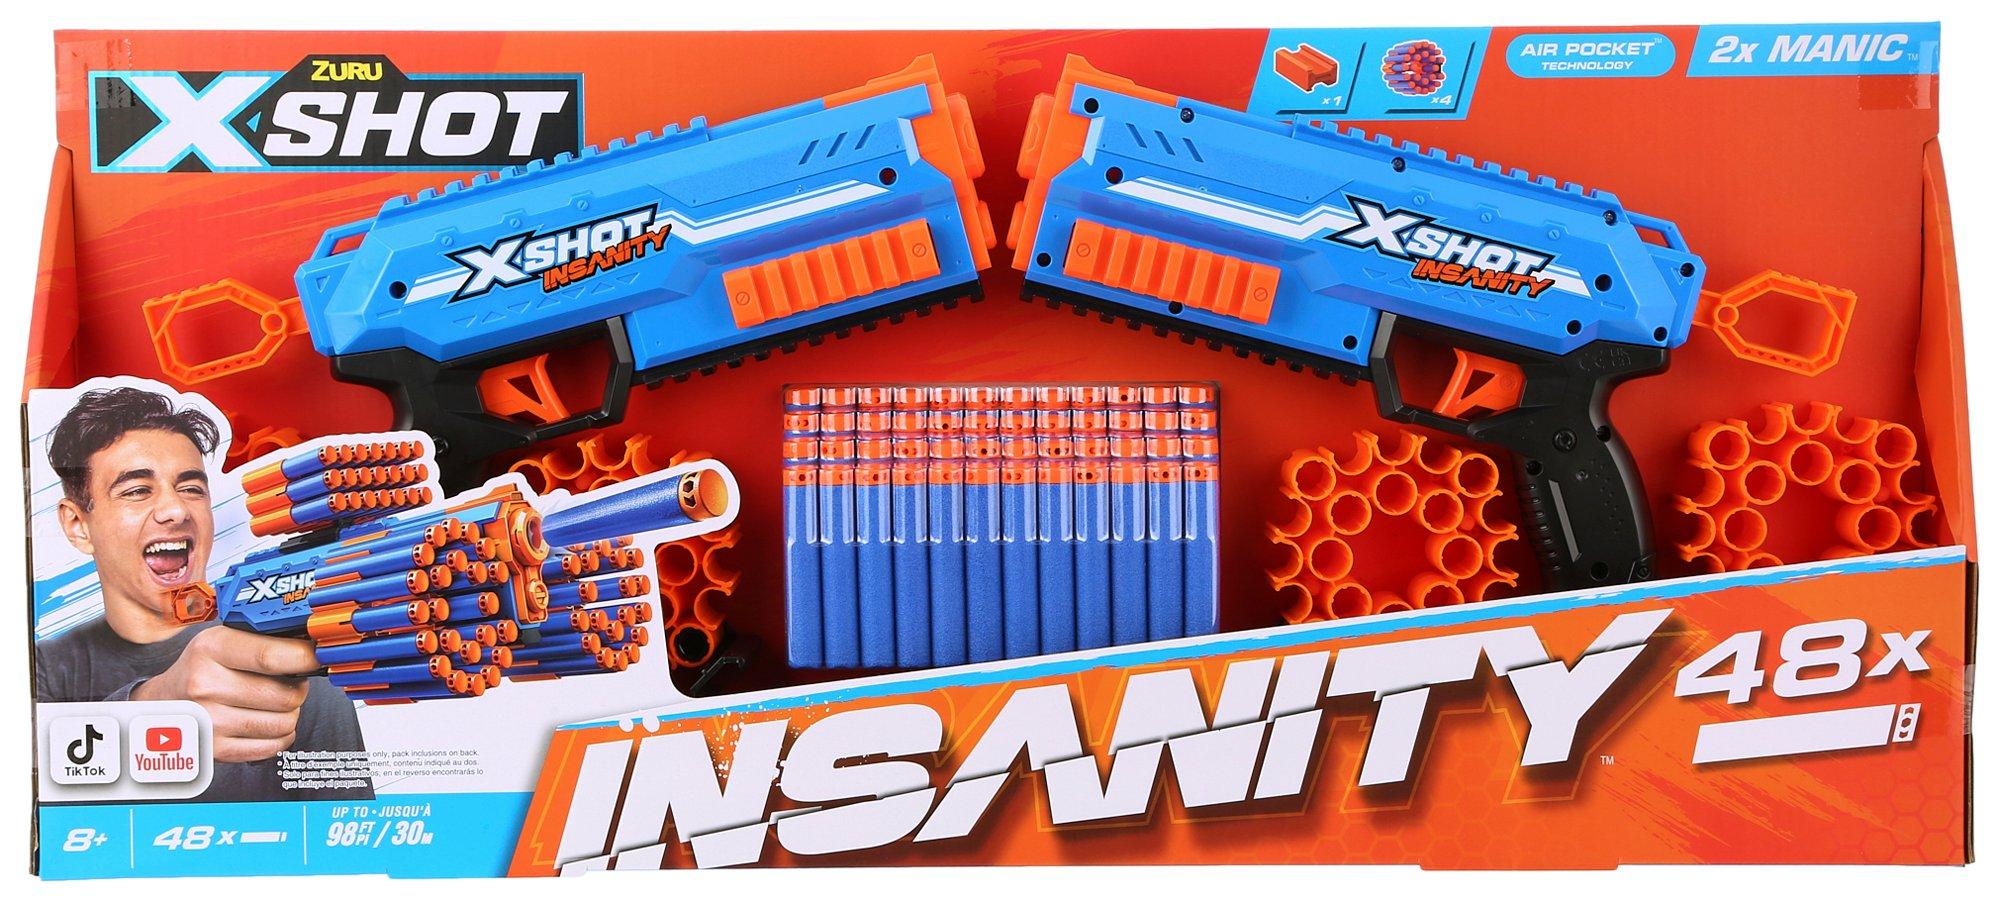 X-Shot Insanity Manic Blaster - Insanity at its most intense